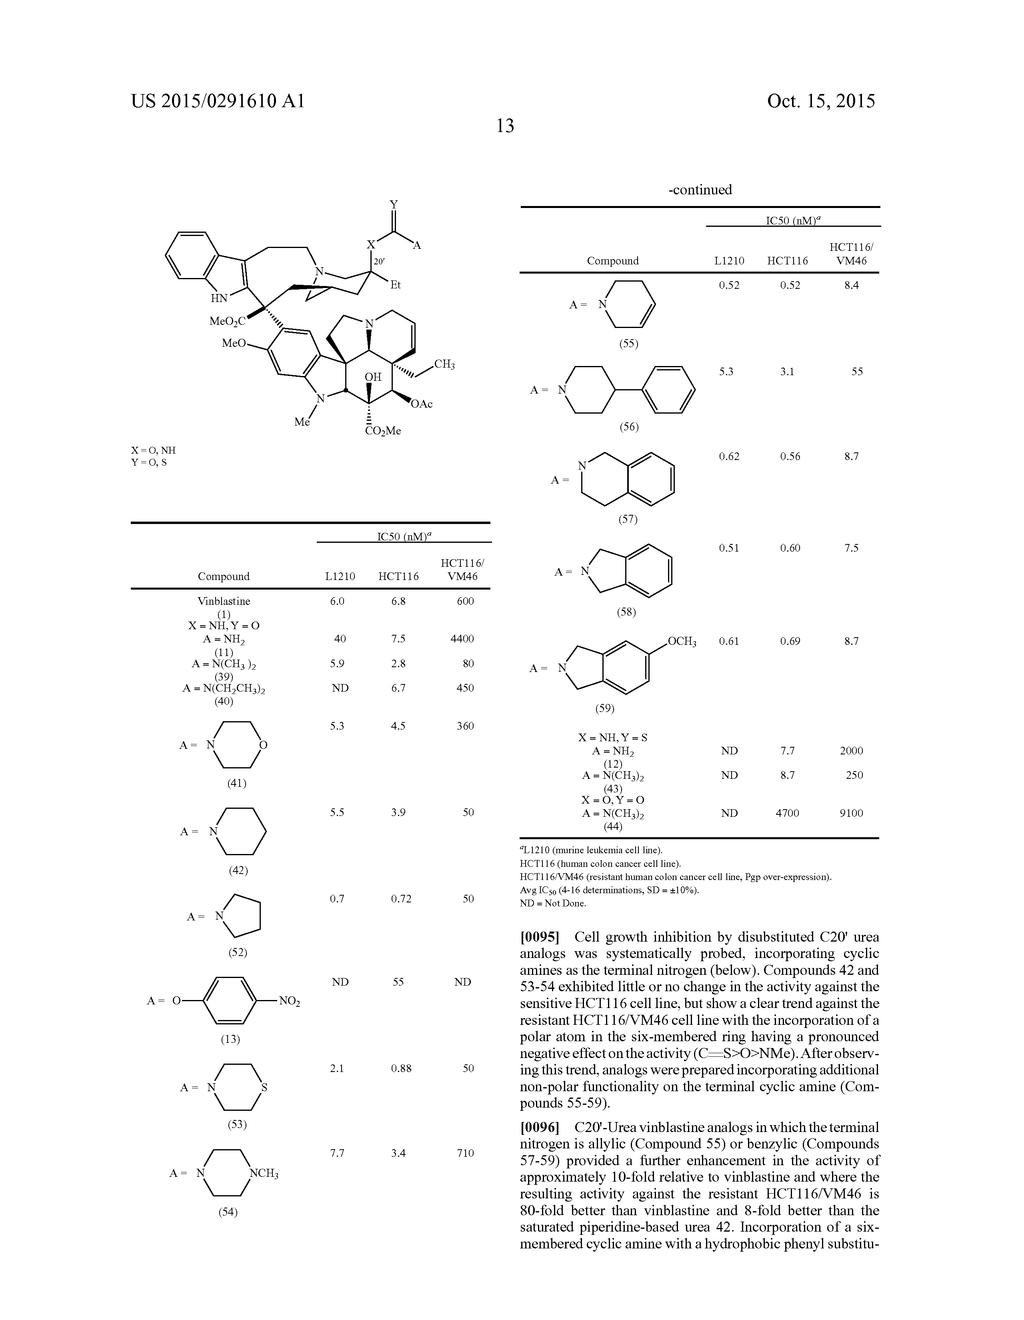 C20' Urea Derivatives of Vinca Alkaloids - diagram, schematic, and image 14